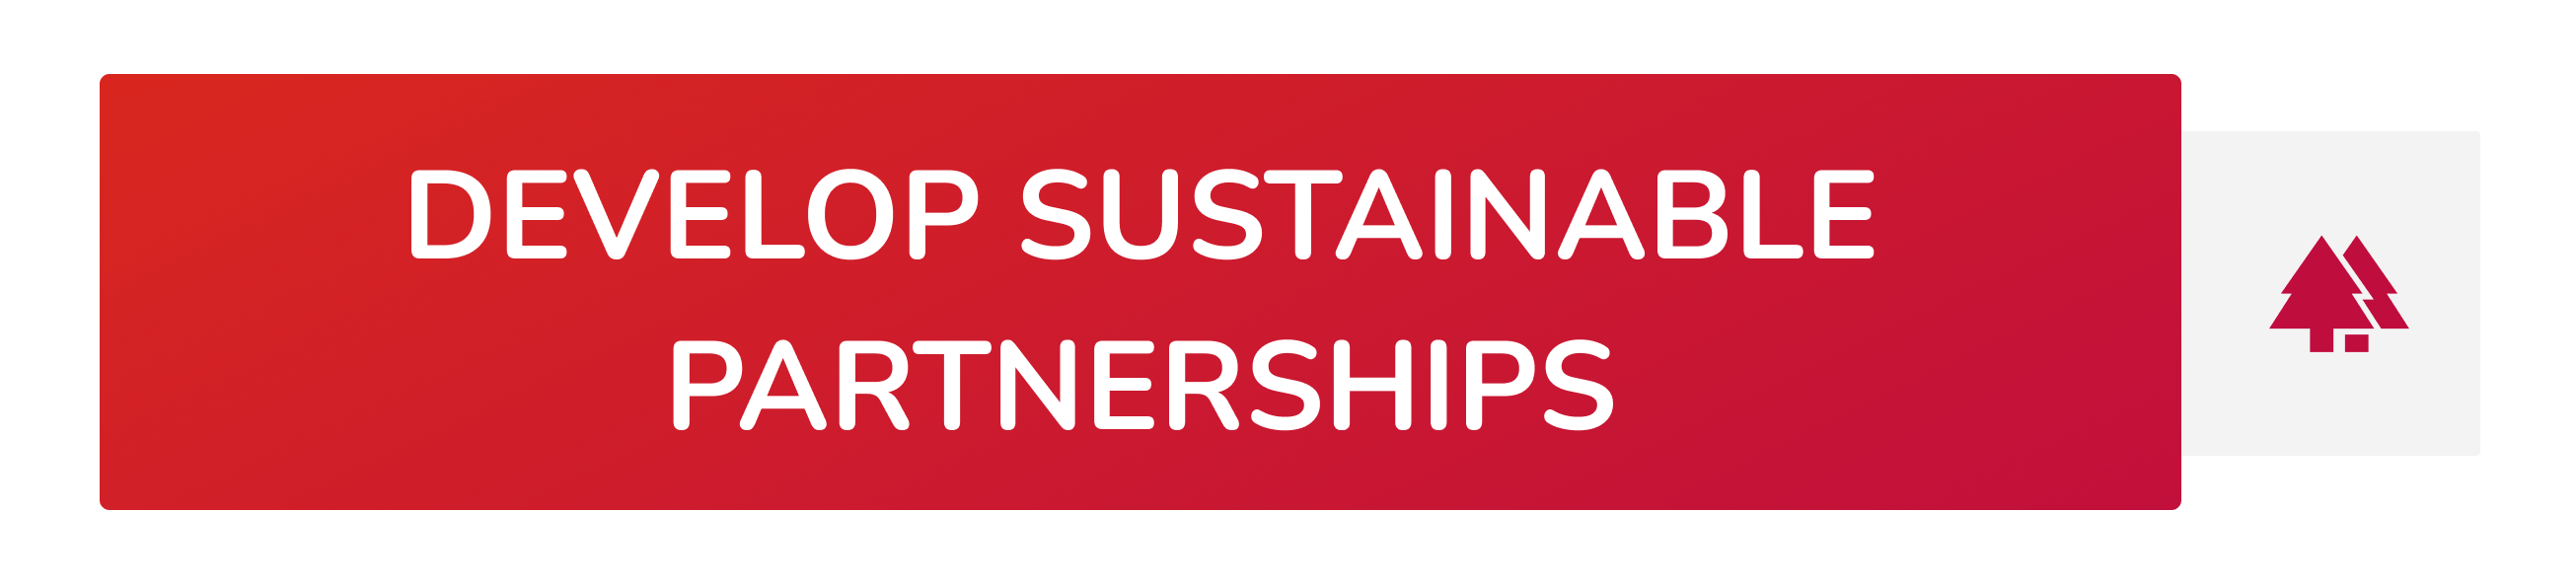 Develop sustainable partnerships